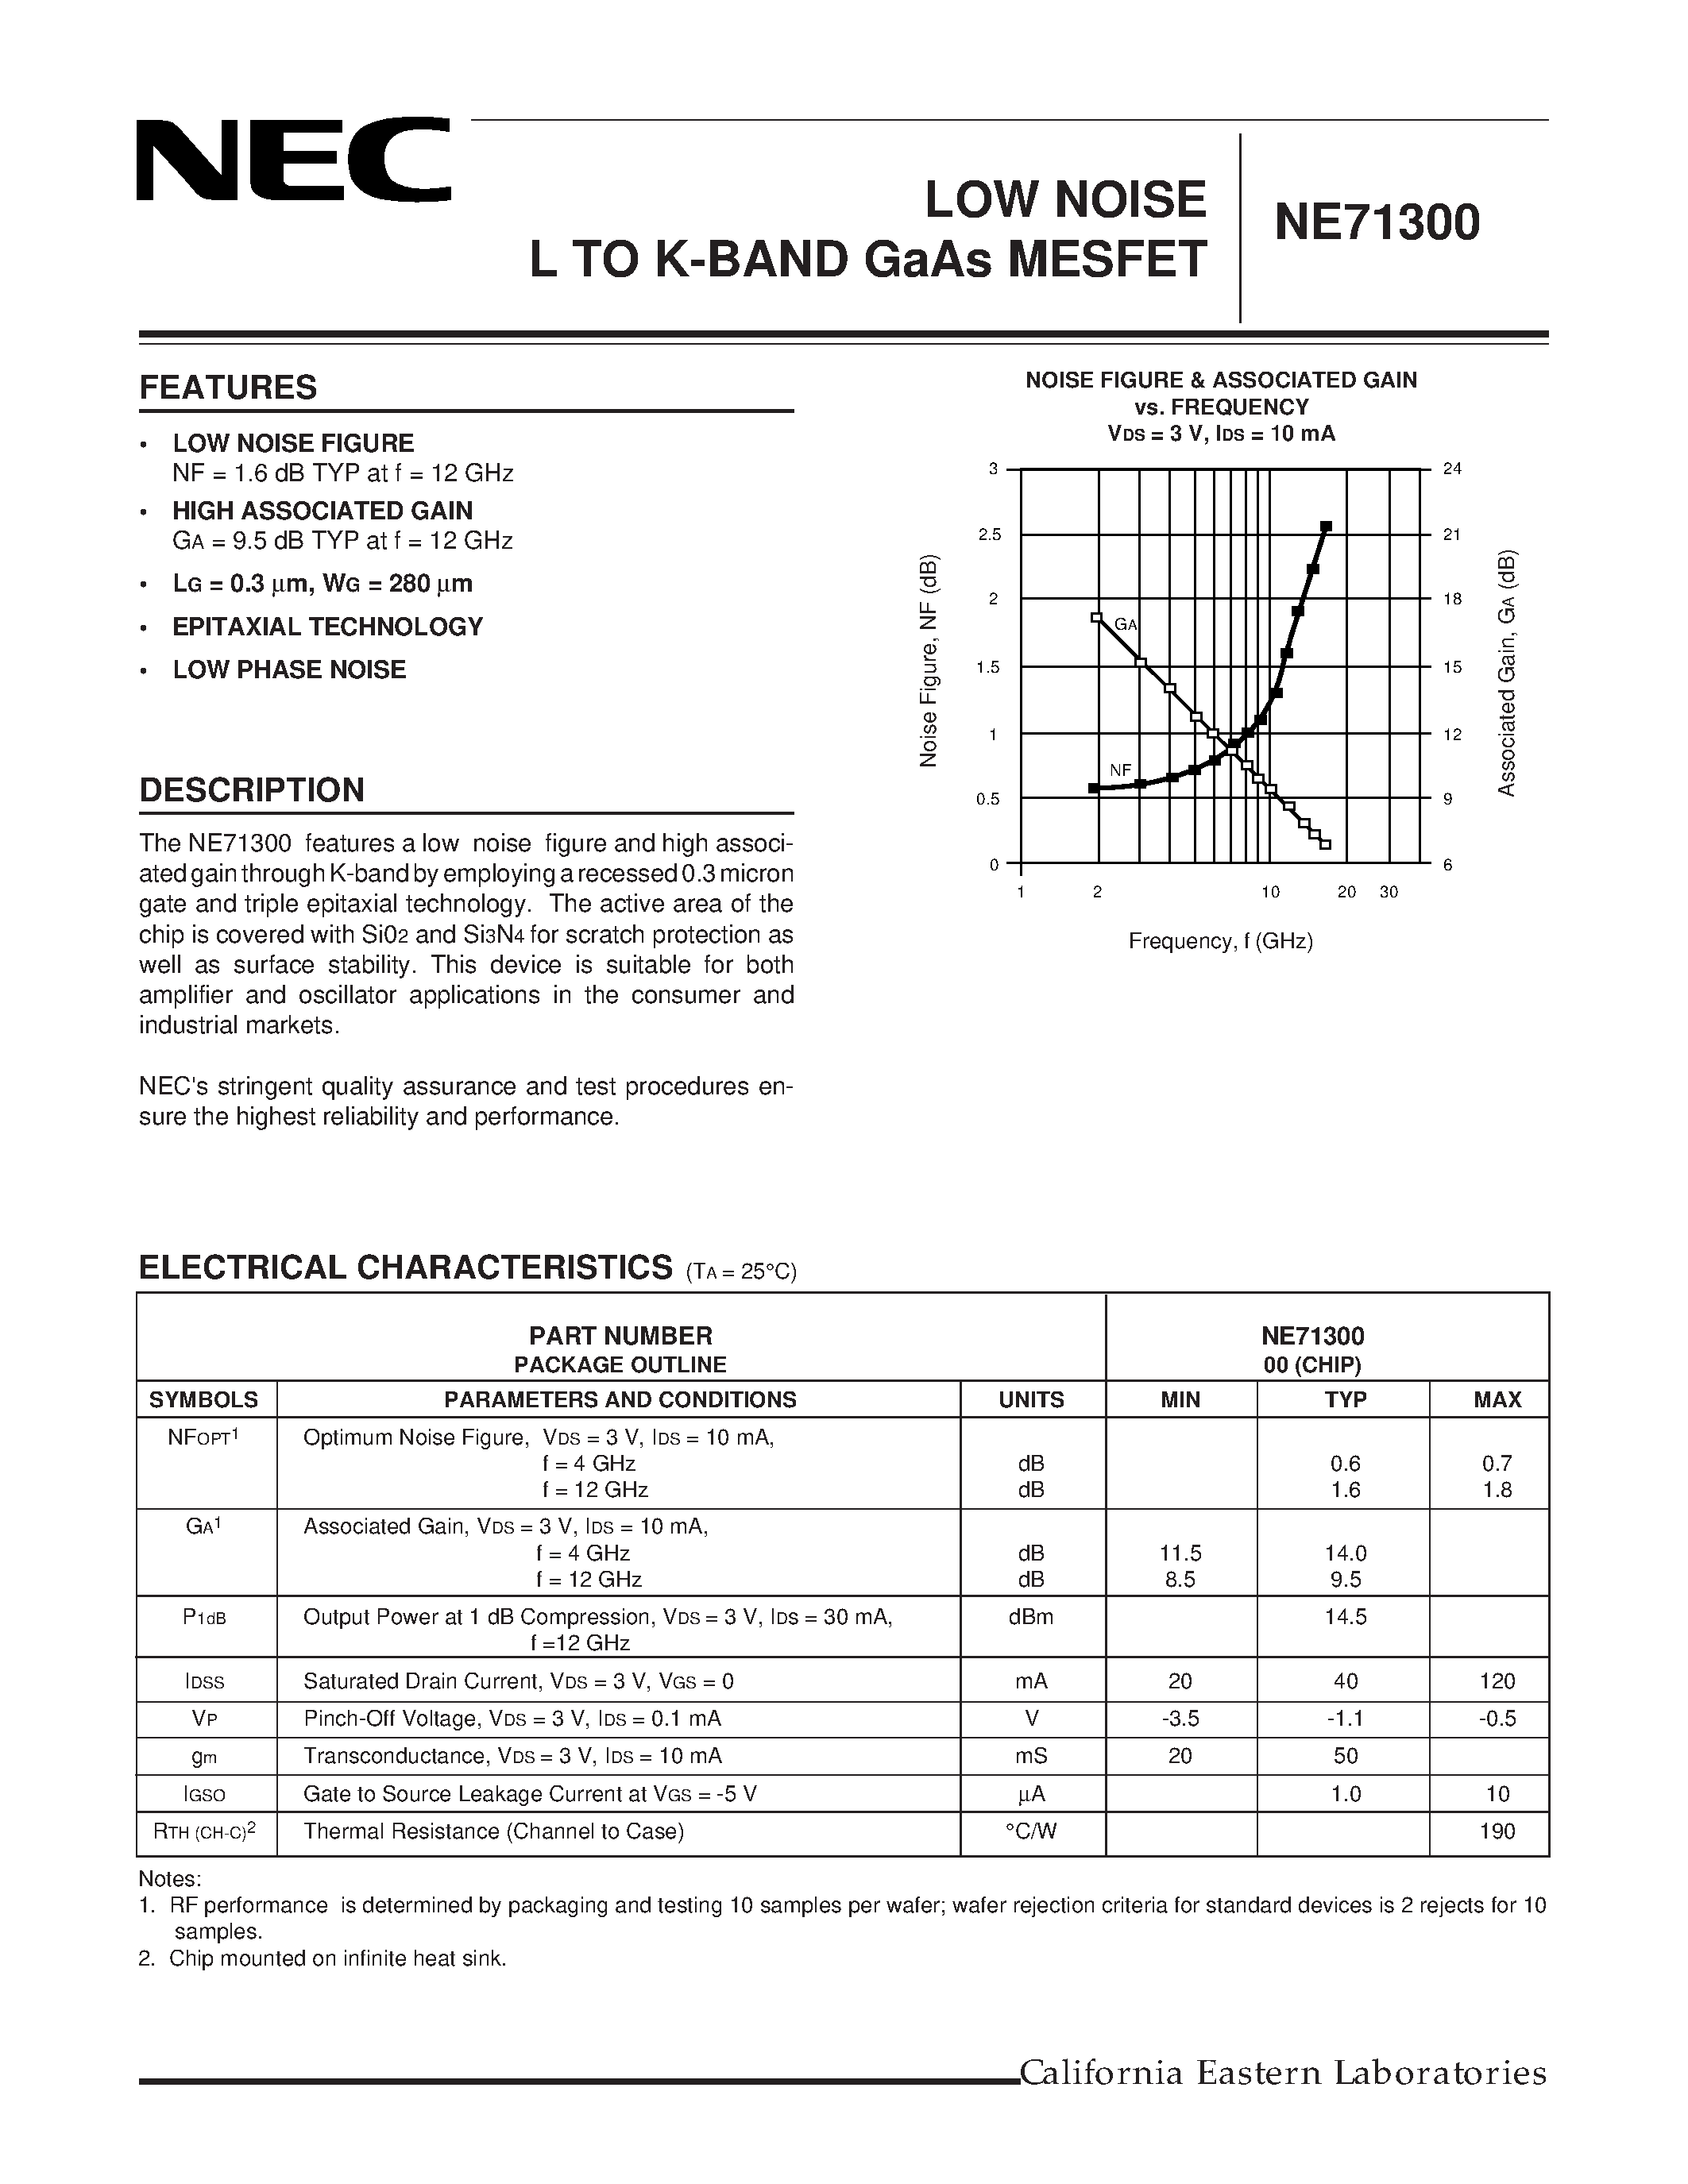 Datasheet NE71300 - LOW NOISE L TO K-BAND GaAs MESFET page 1